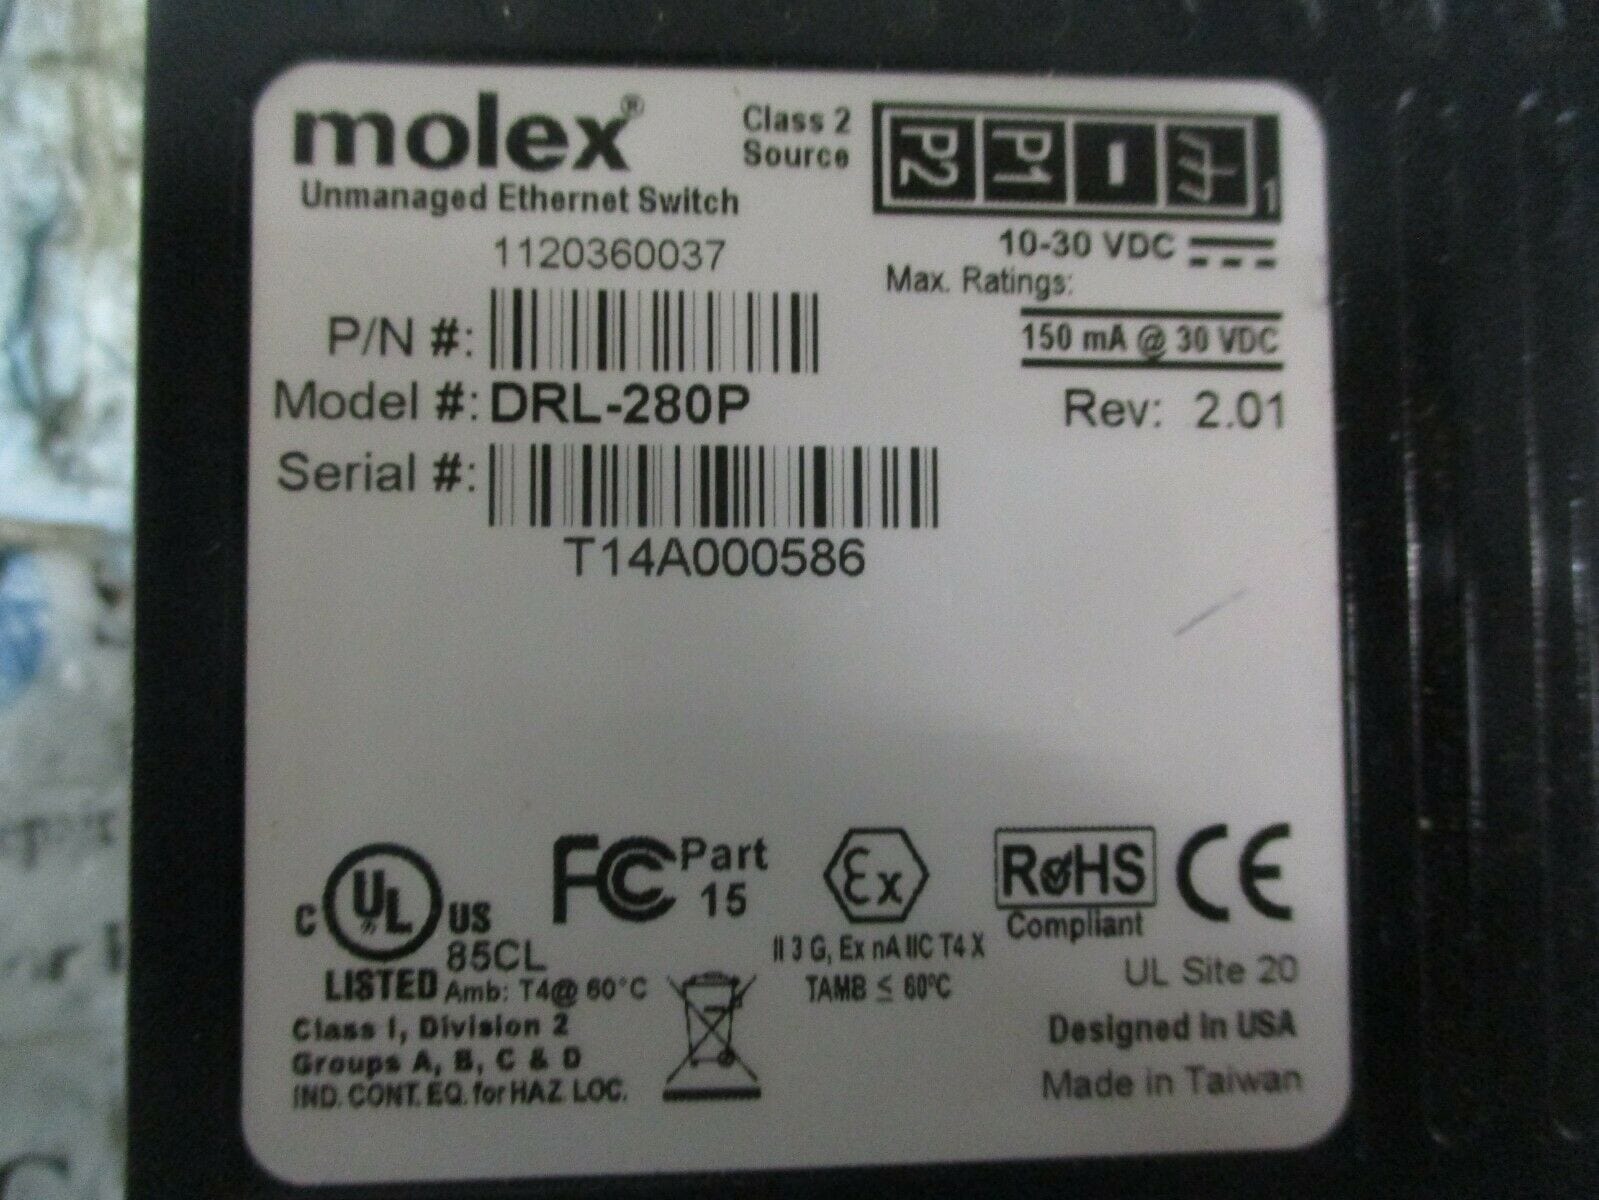 Details about   Brad DRL-280P 8-Port Industrial Ethernet Switch Molex 10-30VDC Rev 2.01 *Tested*